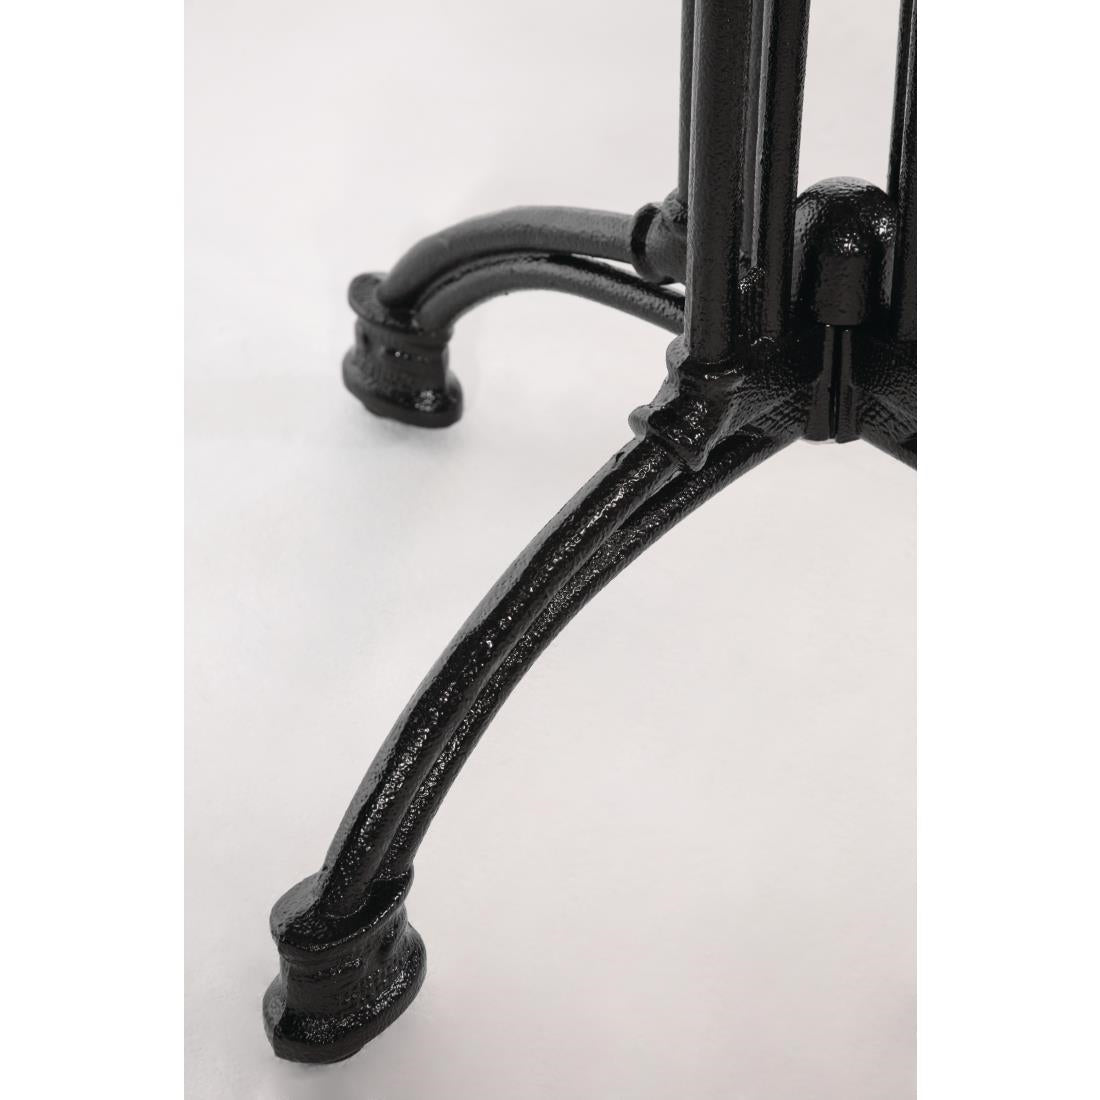 Bolero Cast Iron Decorative Brasserie Table Leg Base JD Catering Equipment Solutions Ltd